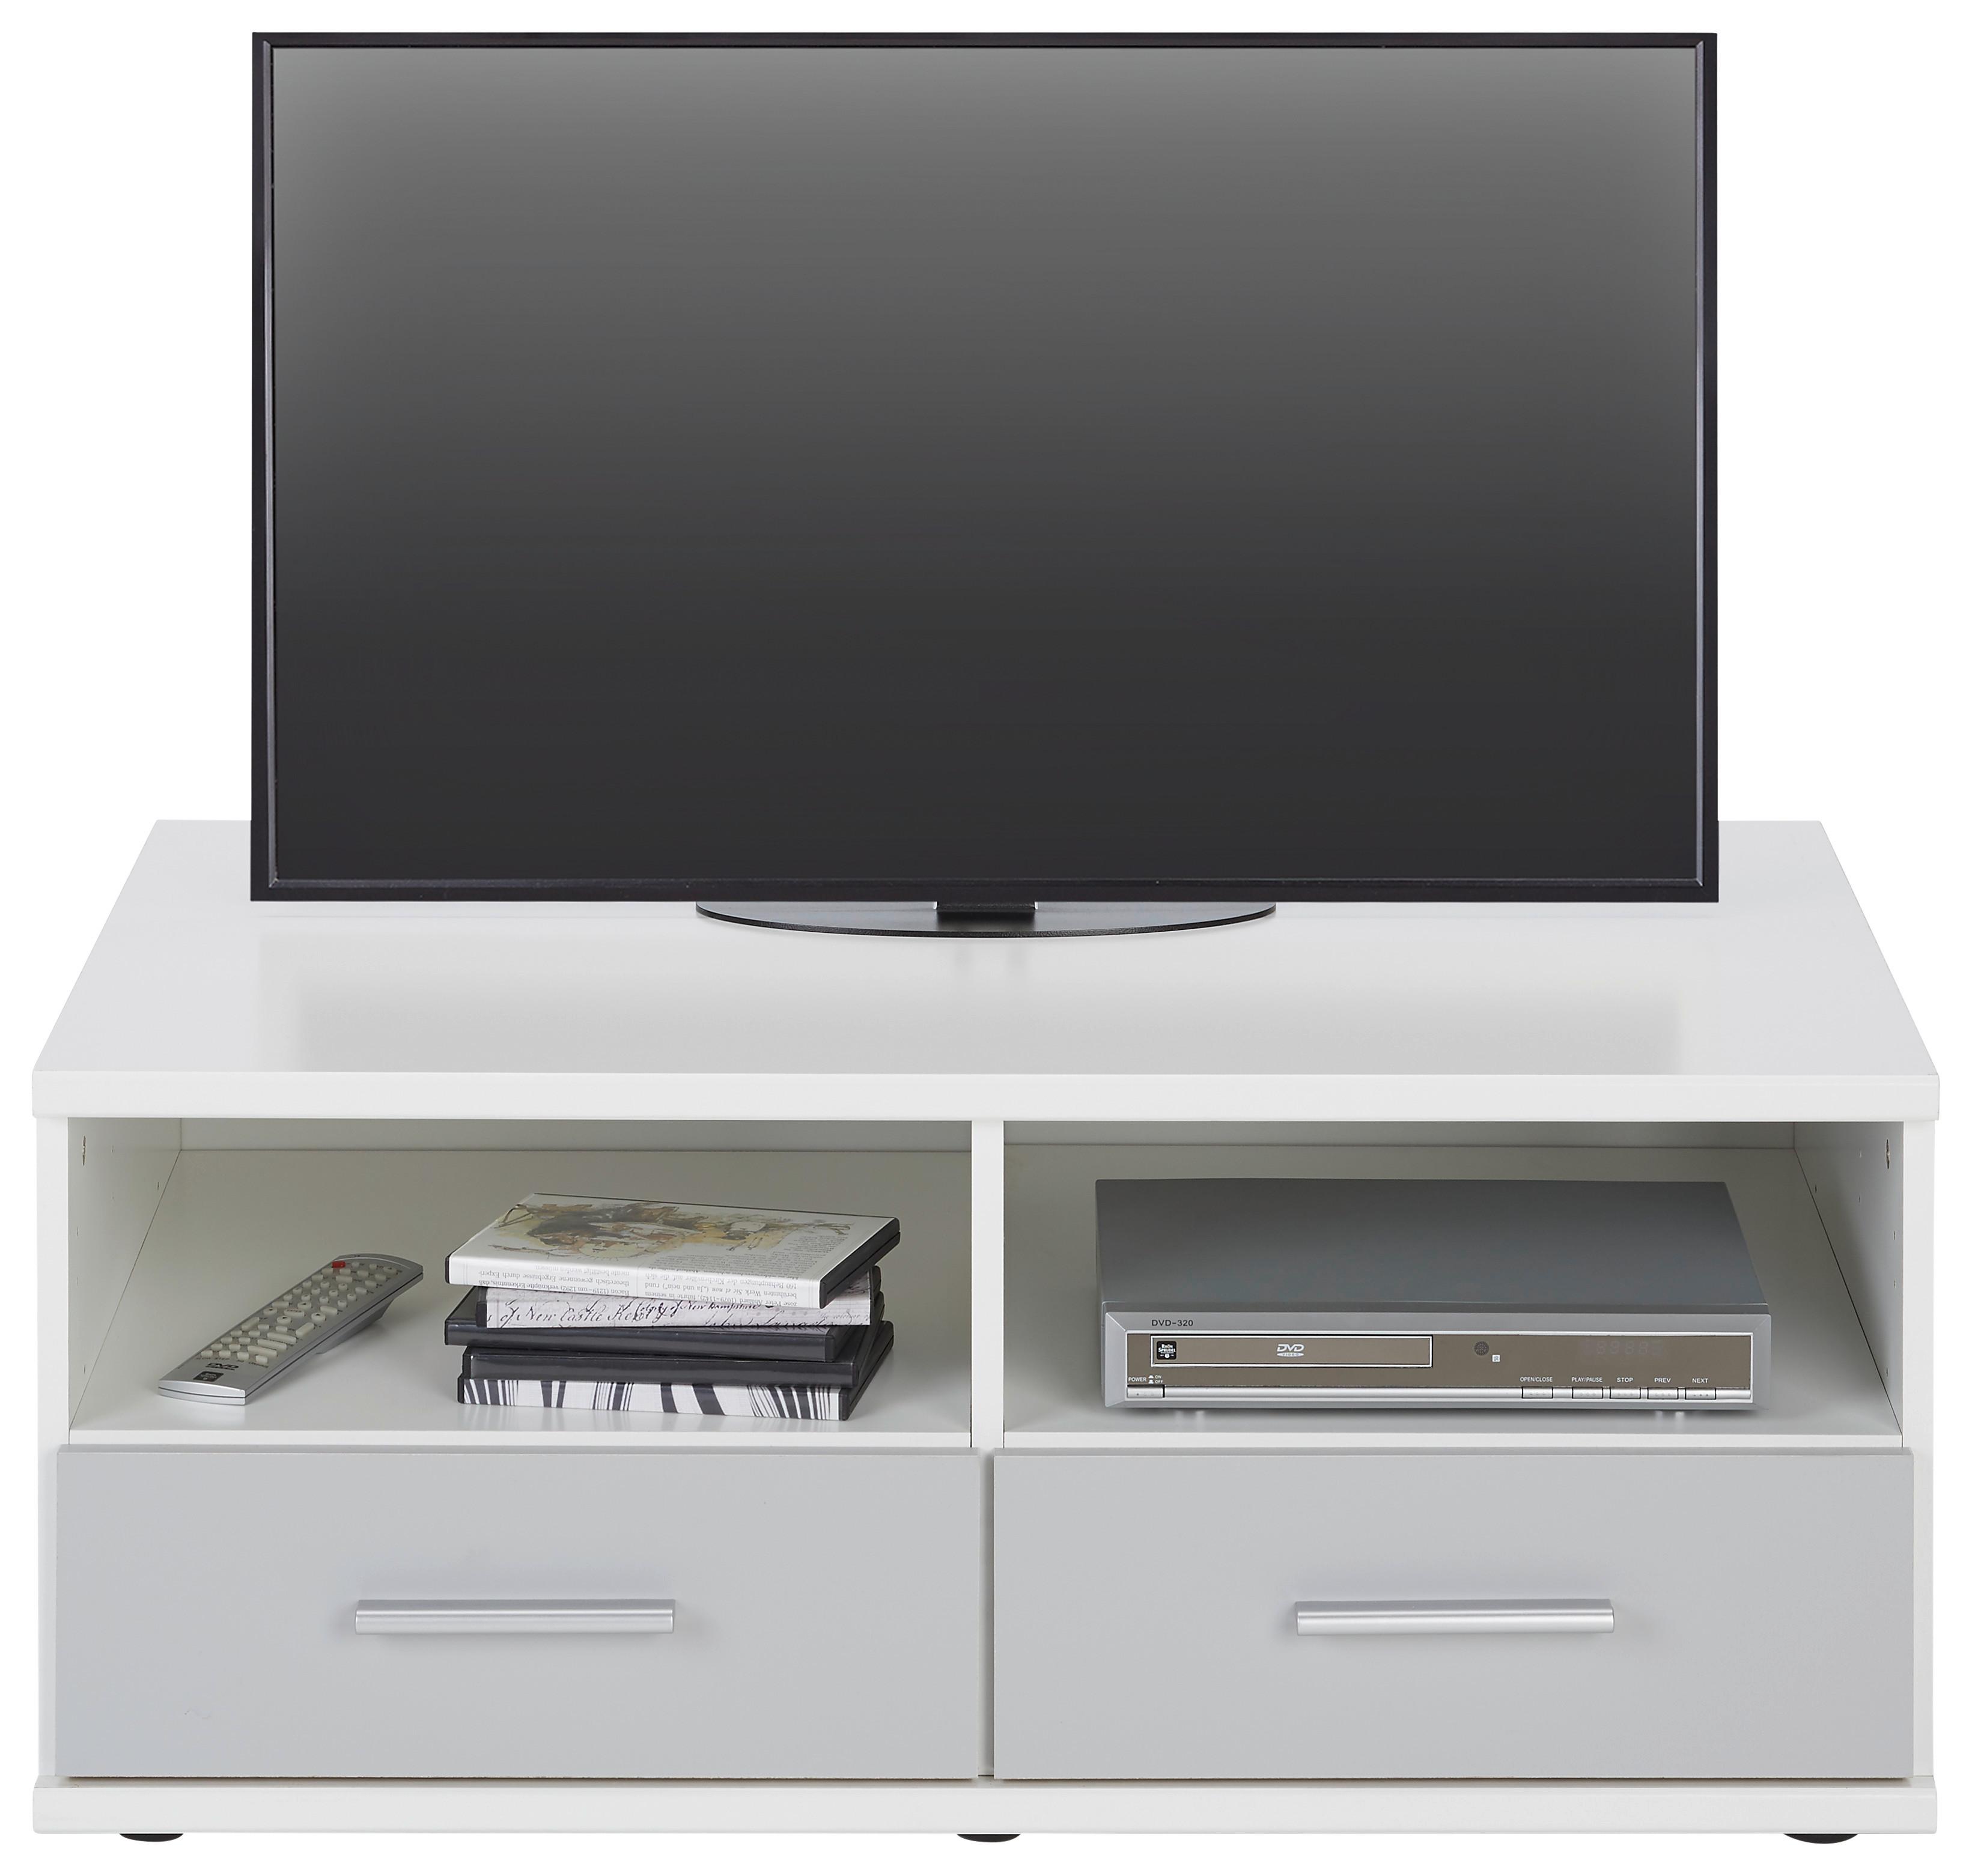 TV-elem fehér-világosszürke YOUNG - Világosszürke/Fehér, Faalapú anyag/Műanyag (92/40/59cm) - Modern Living